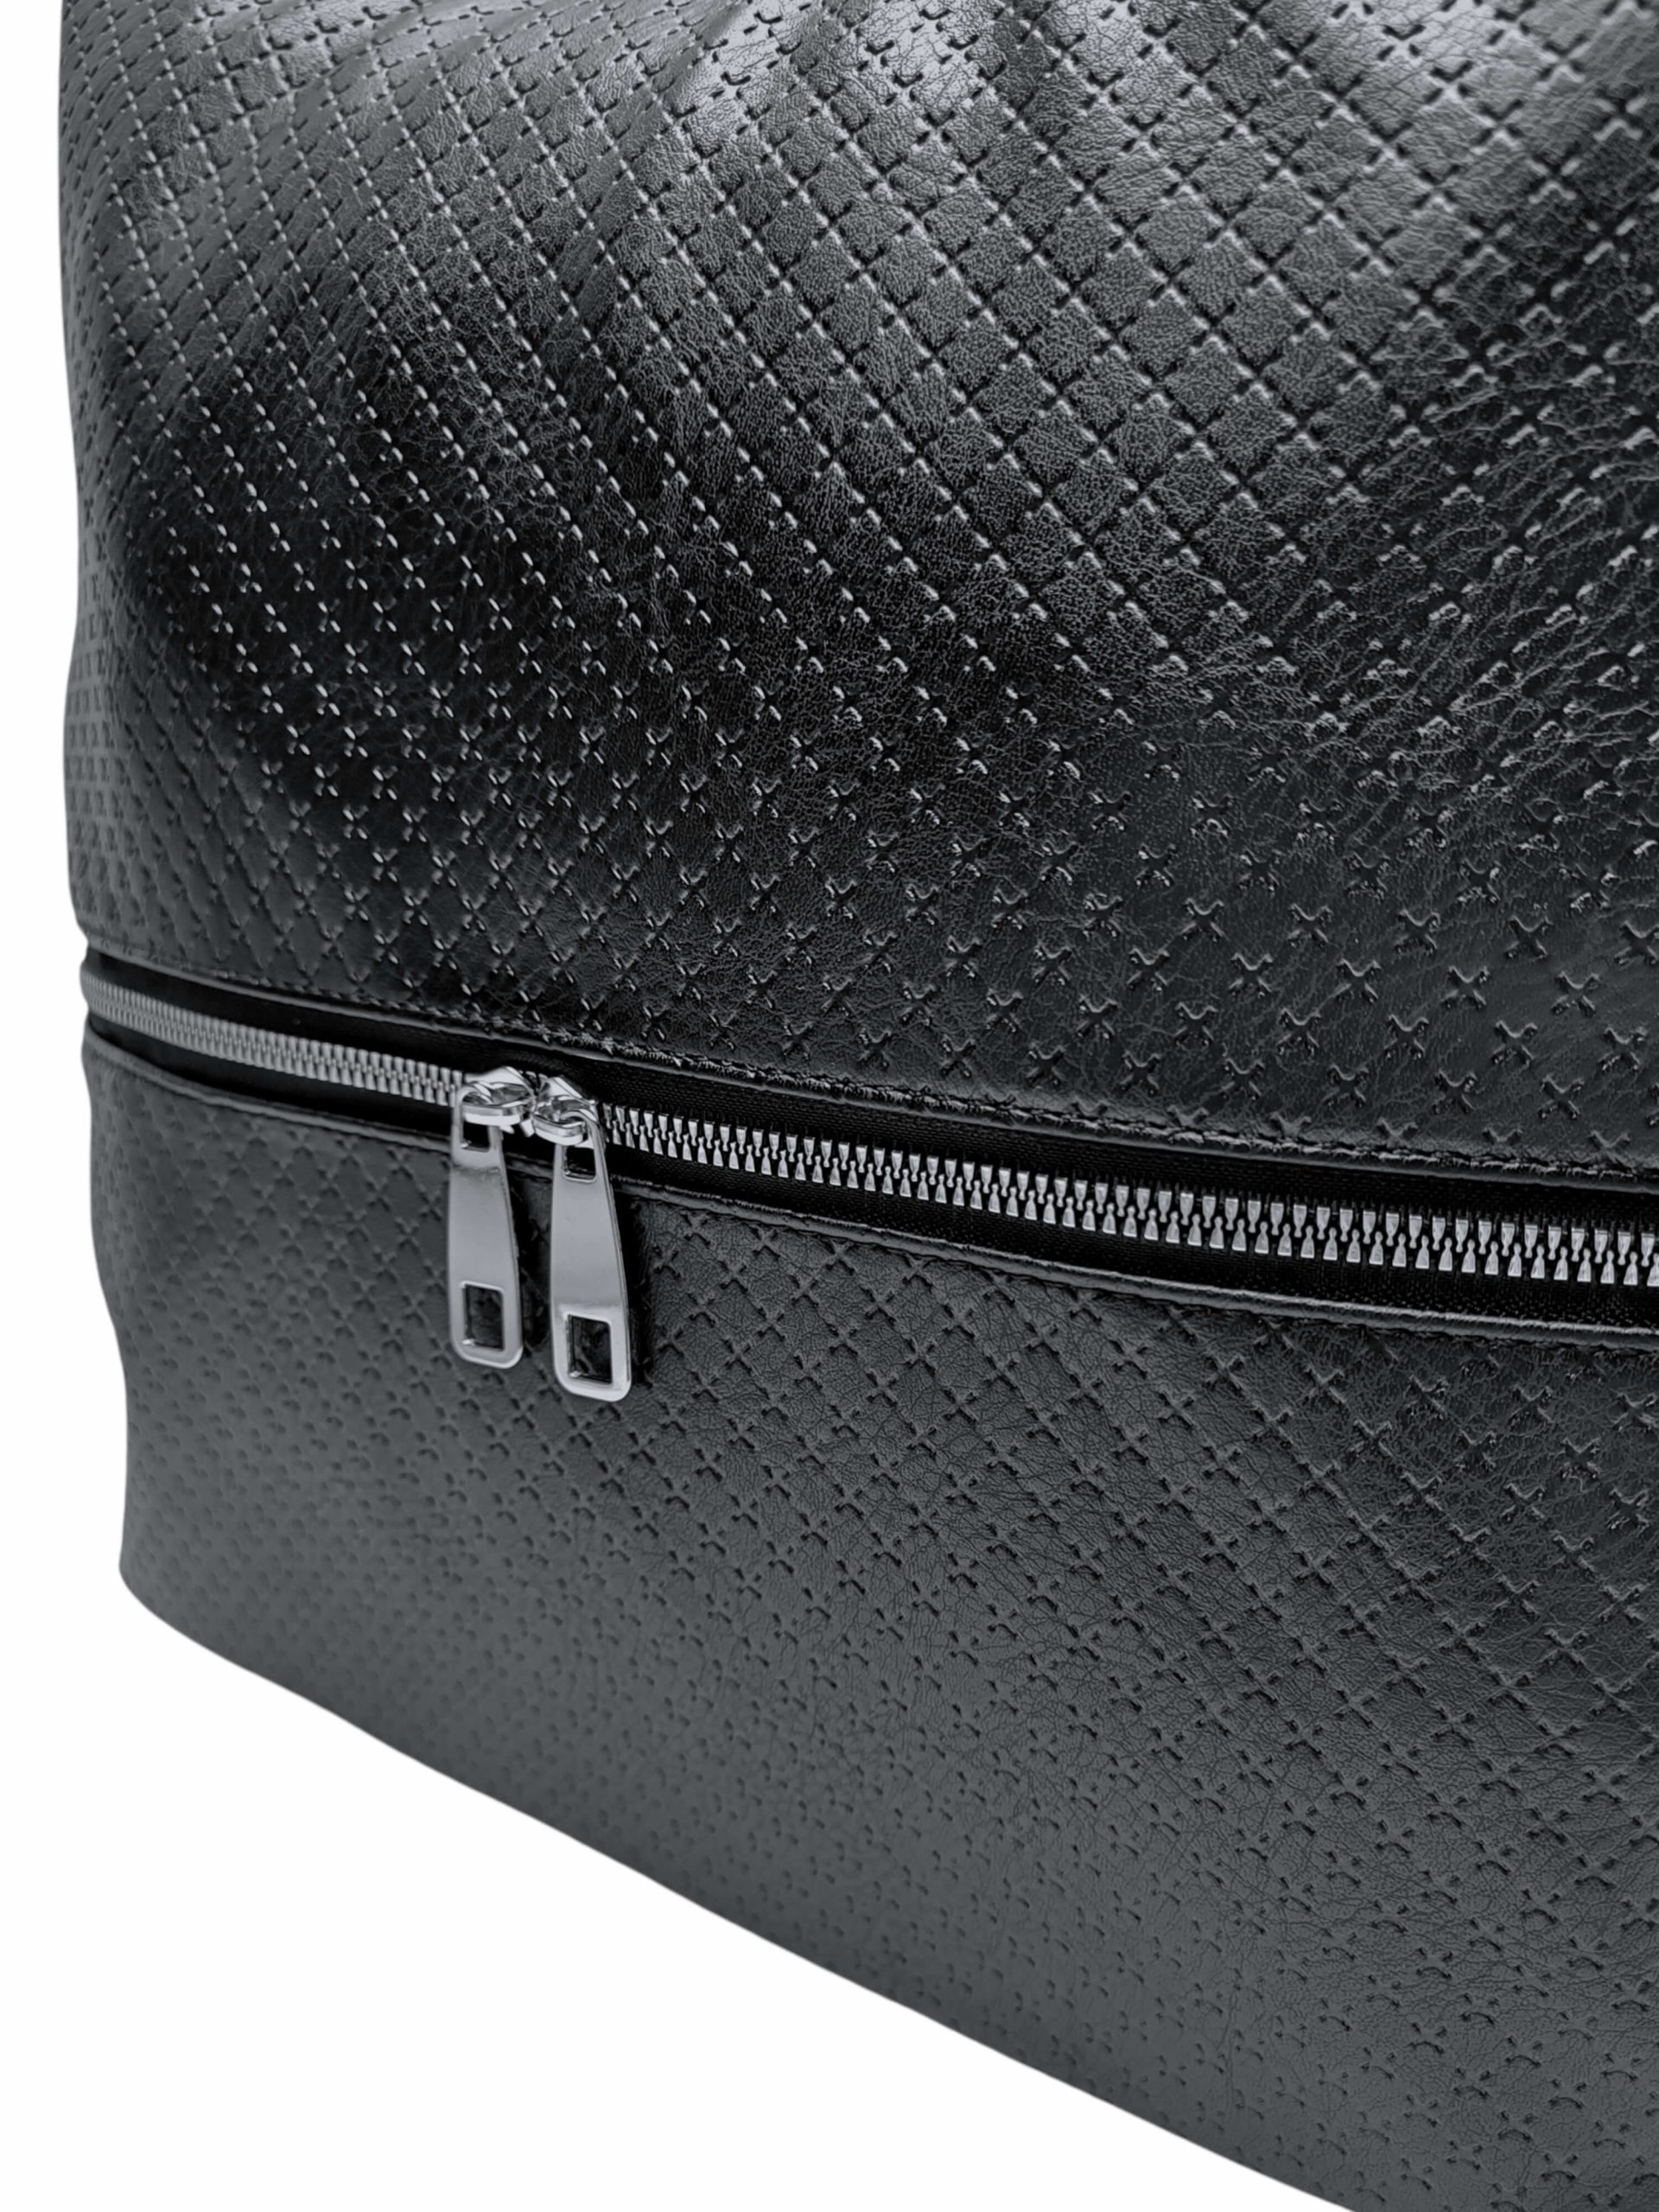 Velký černý kabelko-batoh 2v1 s praktickou kapsou, Tapple, H190010N+, detail kabelko-batohu 2v1